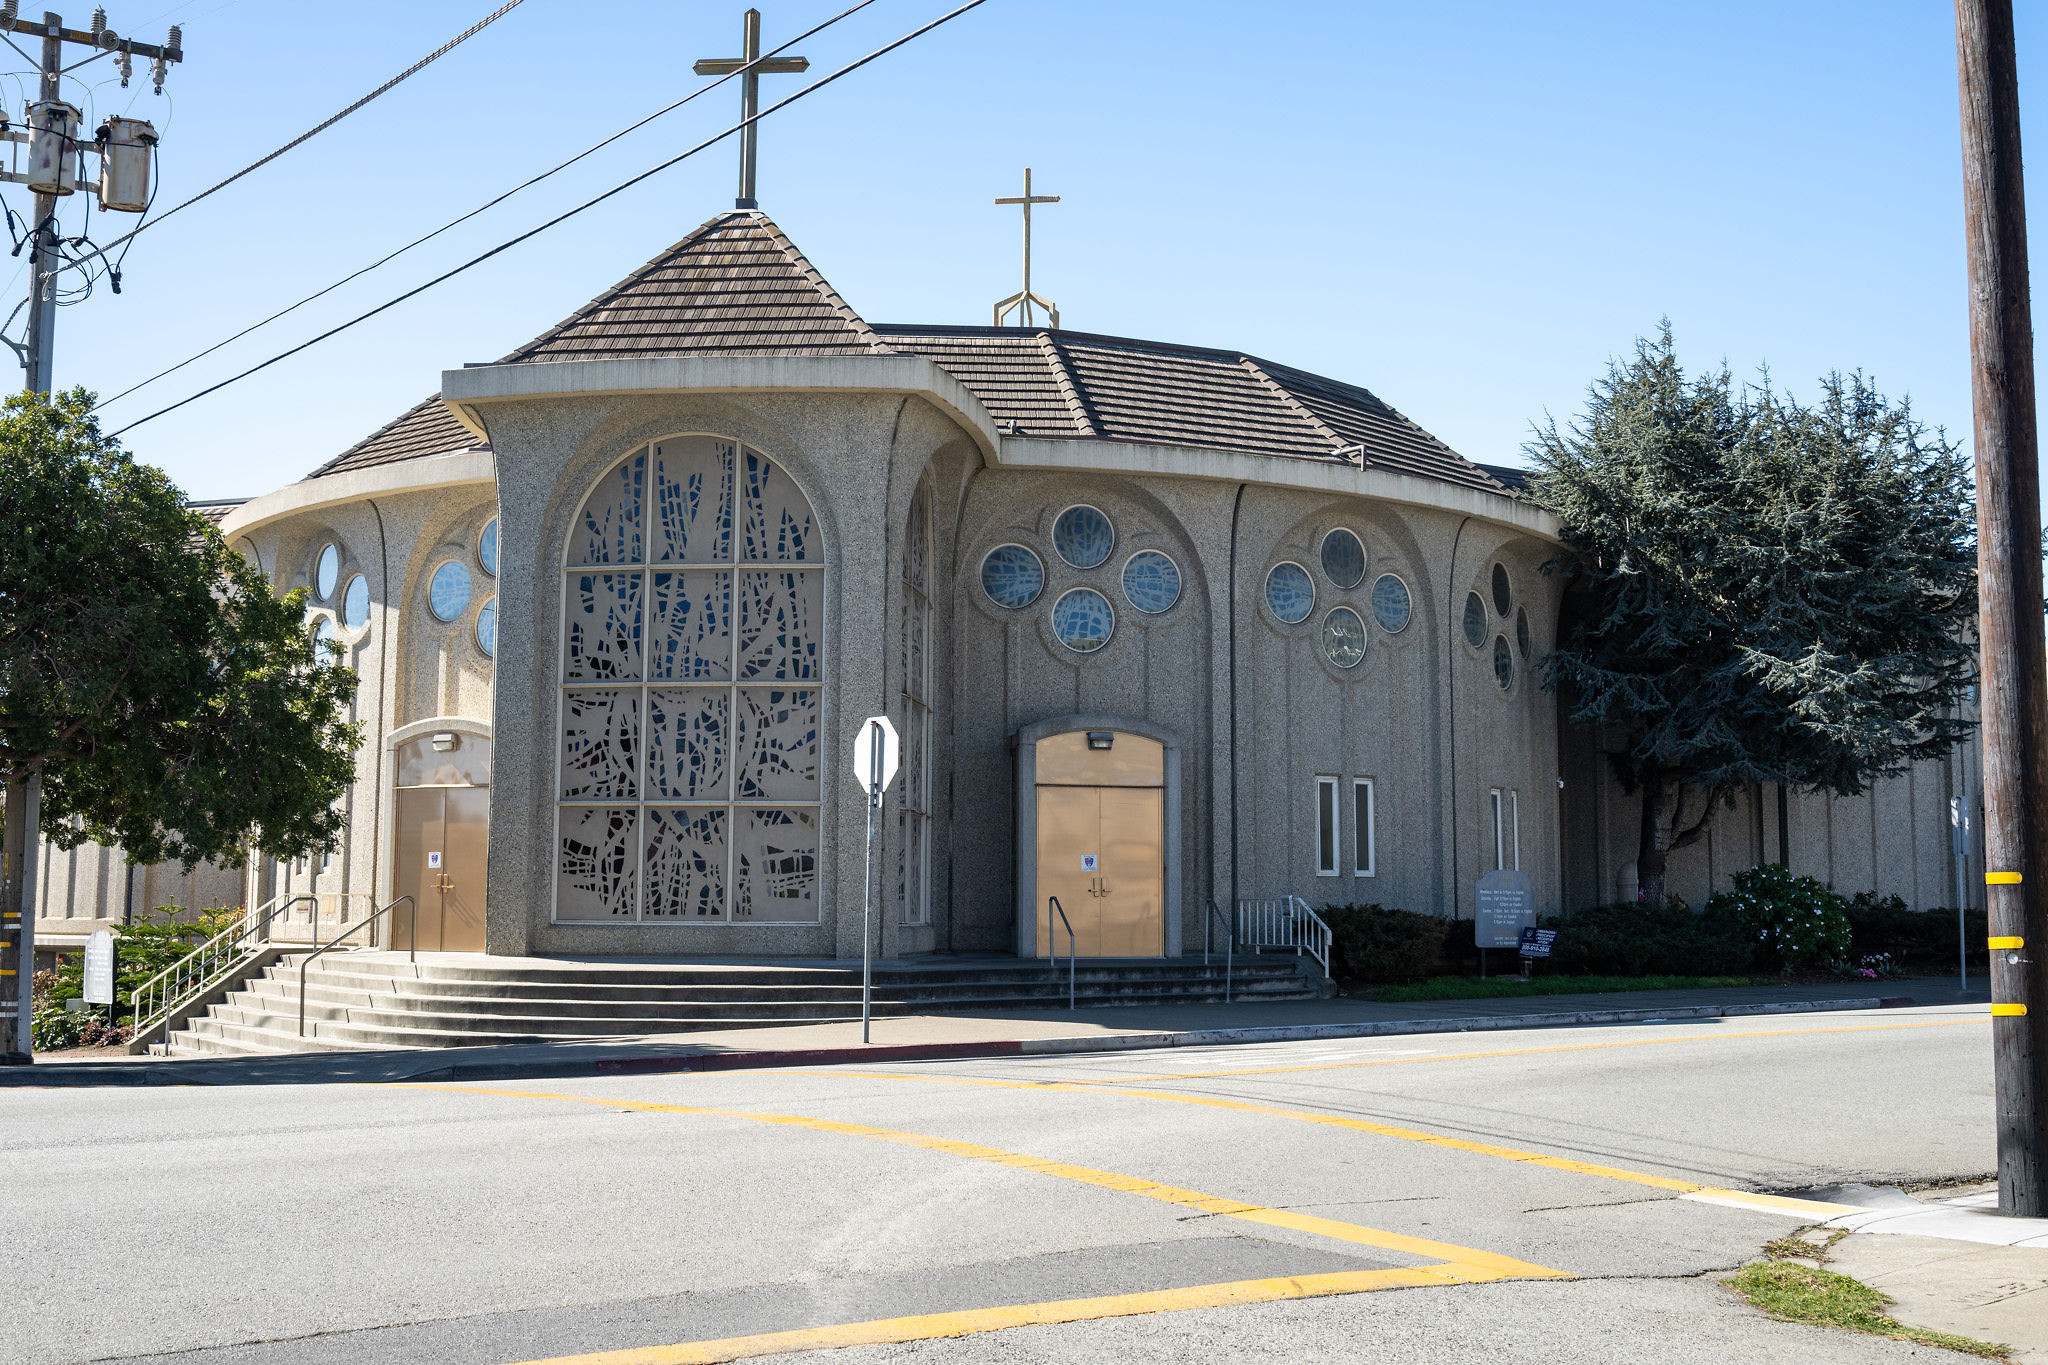 All Souls Catholic Church in South San Francisco.